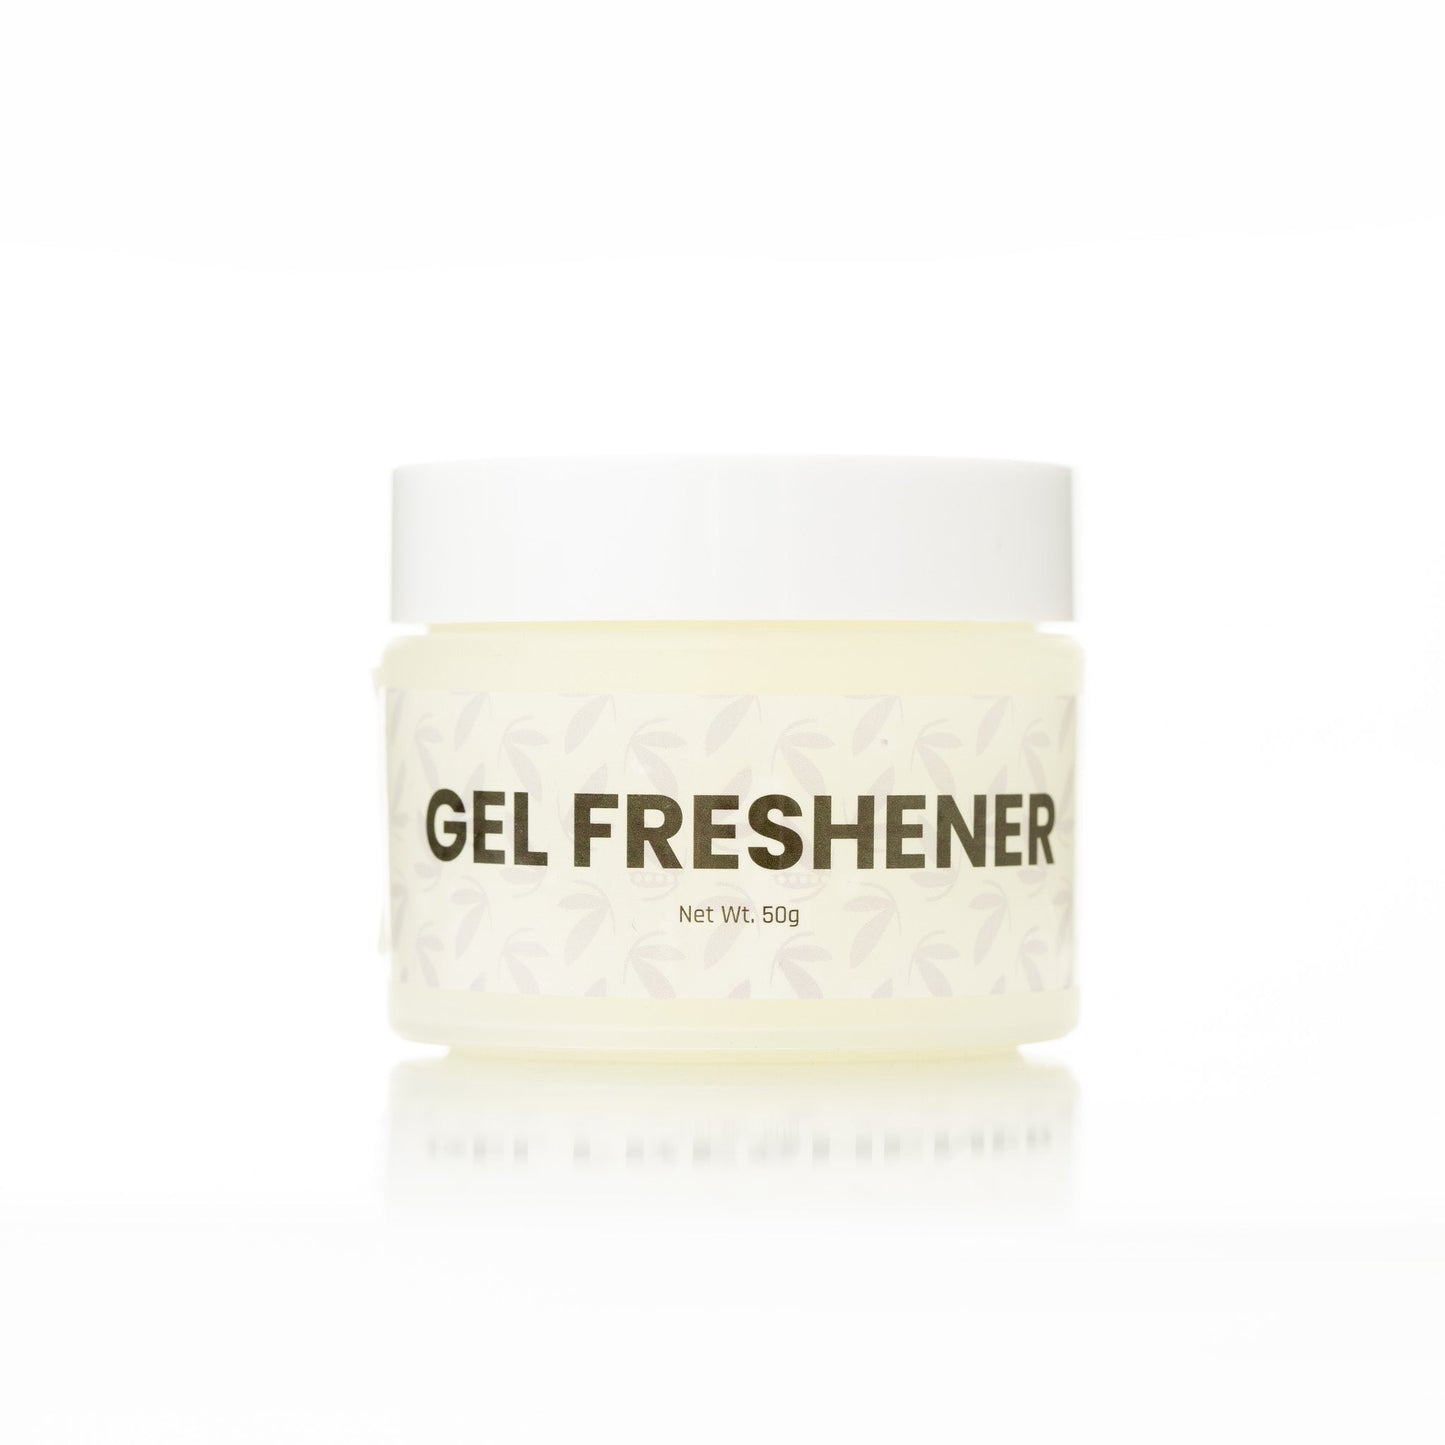 Gel freshener absorbs and eliminates lash adhesive odors.